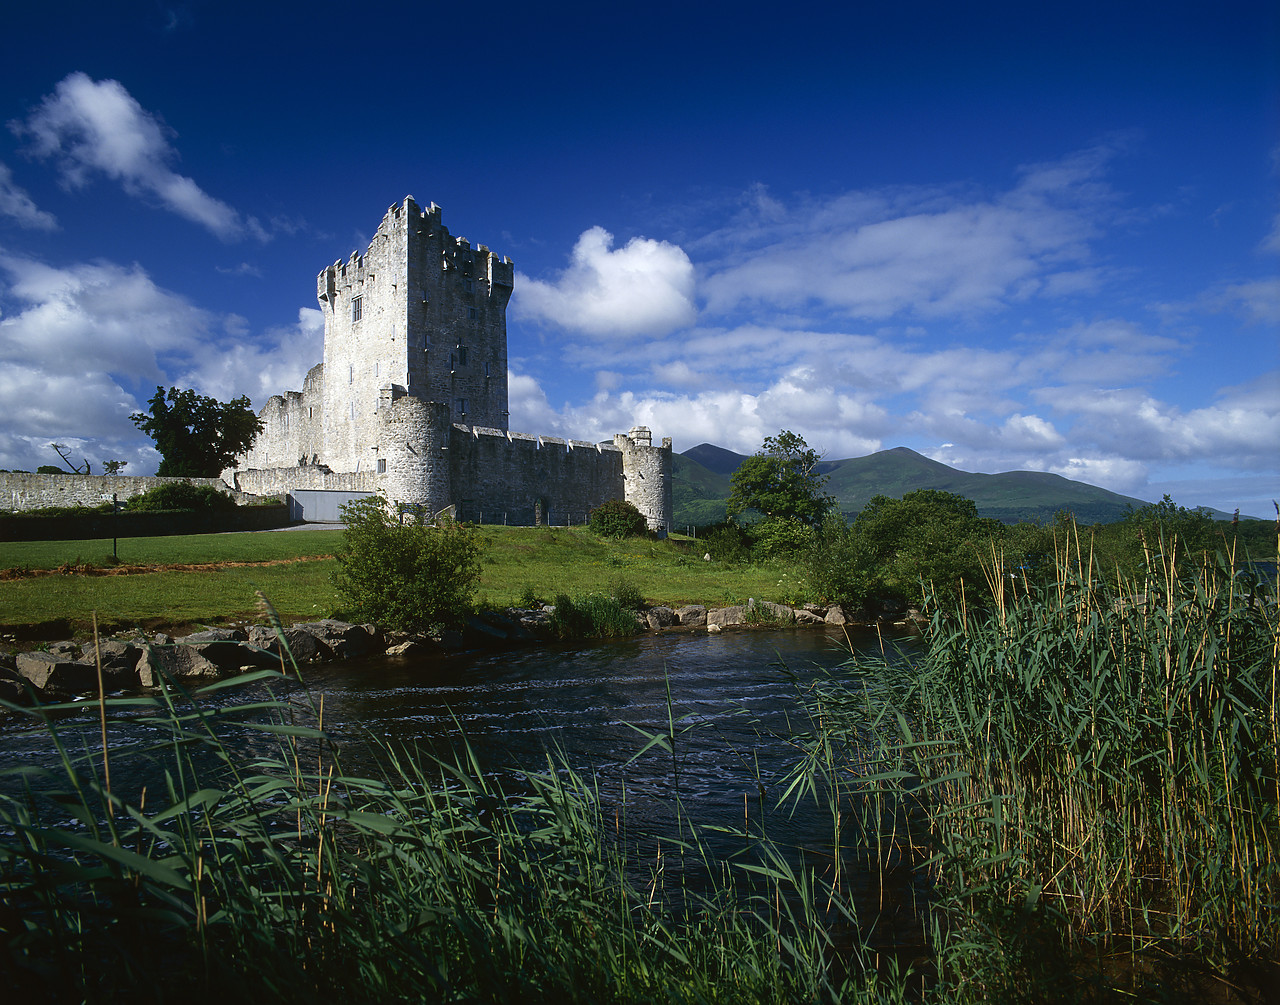 #990208-1 - Ross Castle, Killarney, Co. Kerry, Ireland